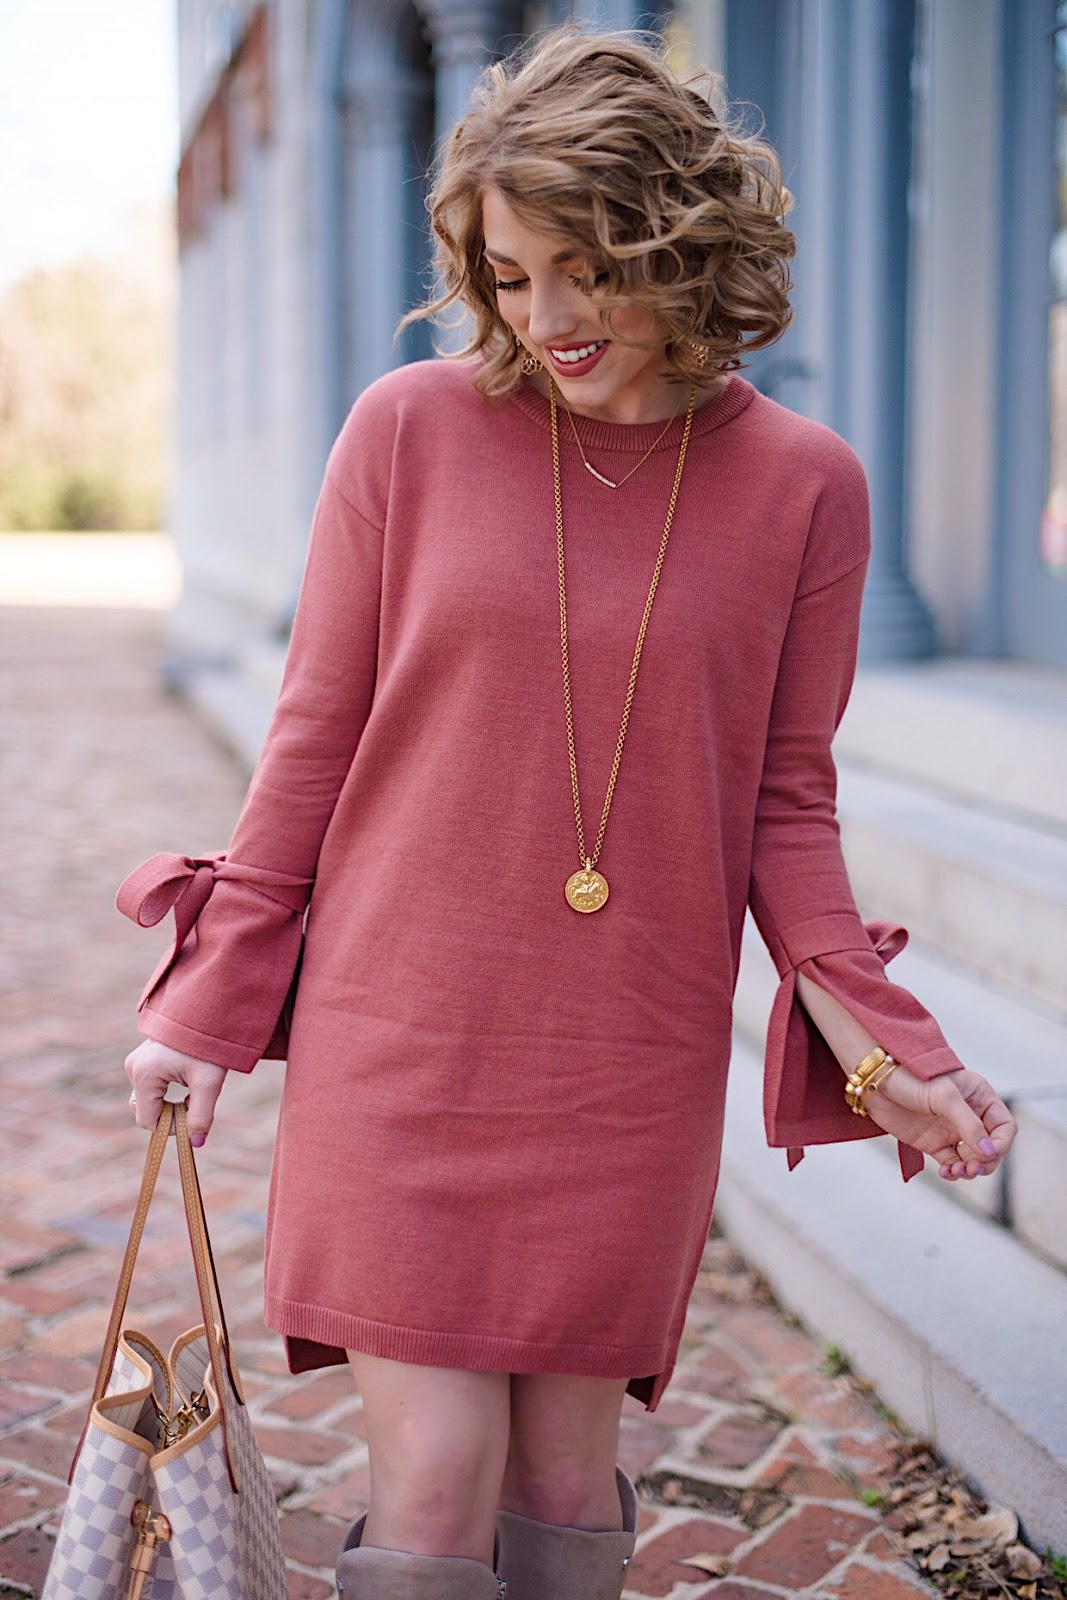 Tied Sleeve Sweater Dress - Something Delightful Blog